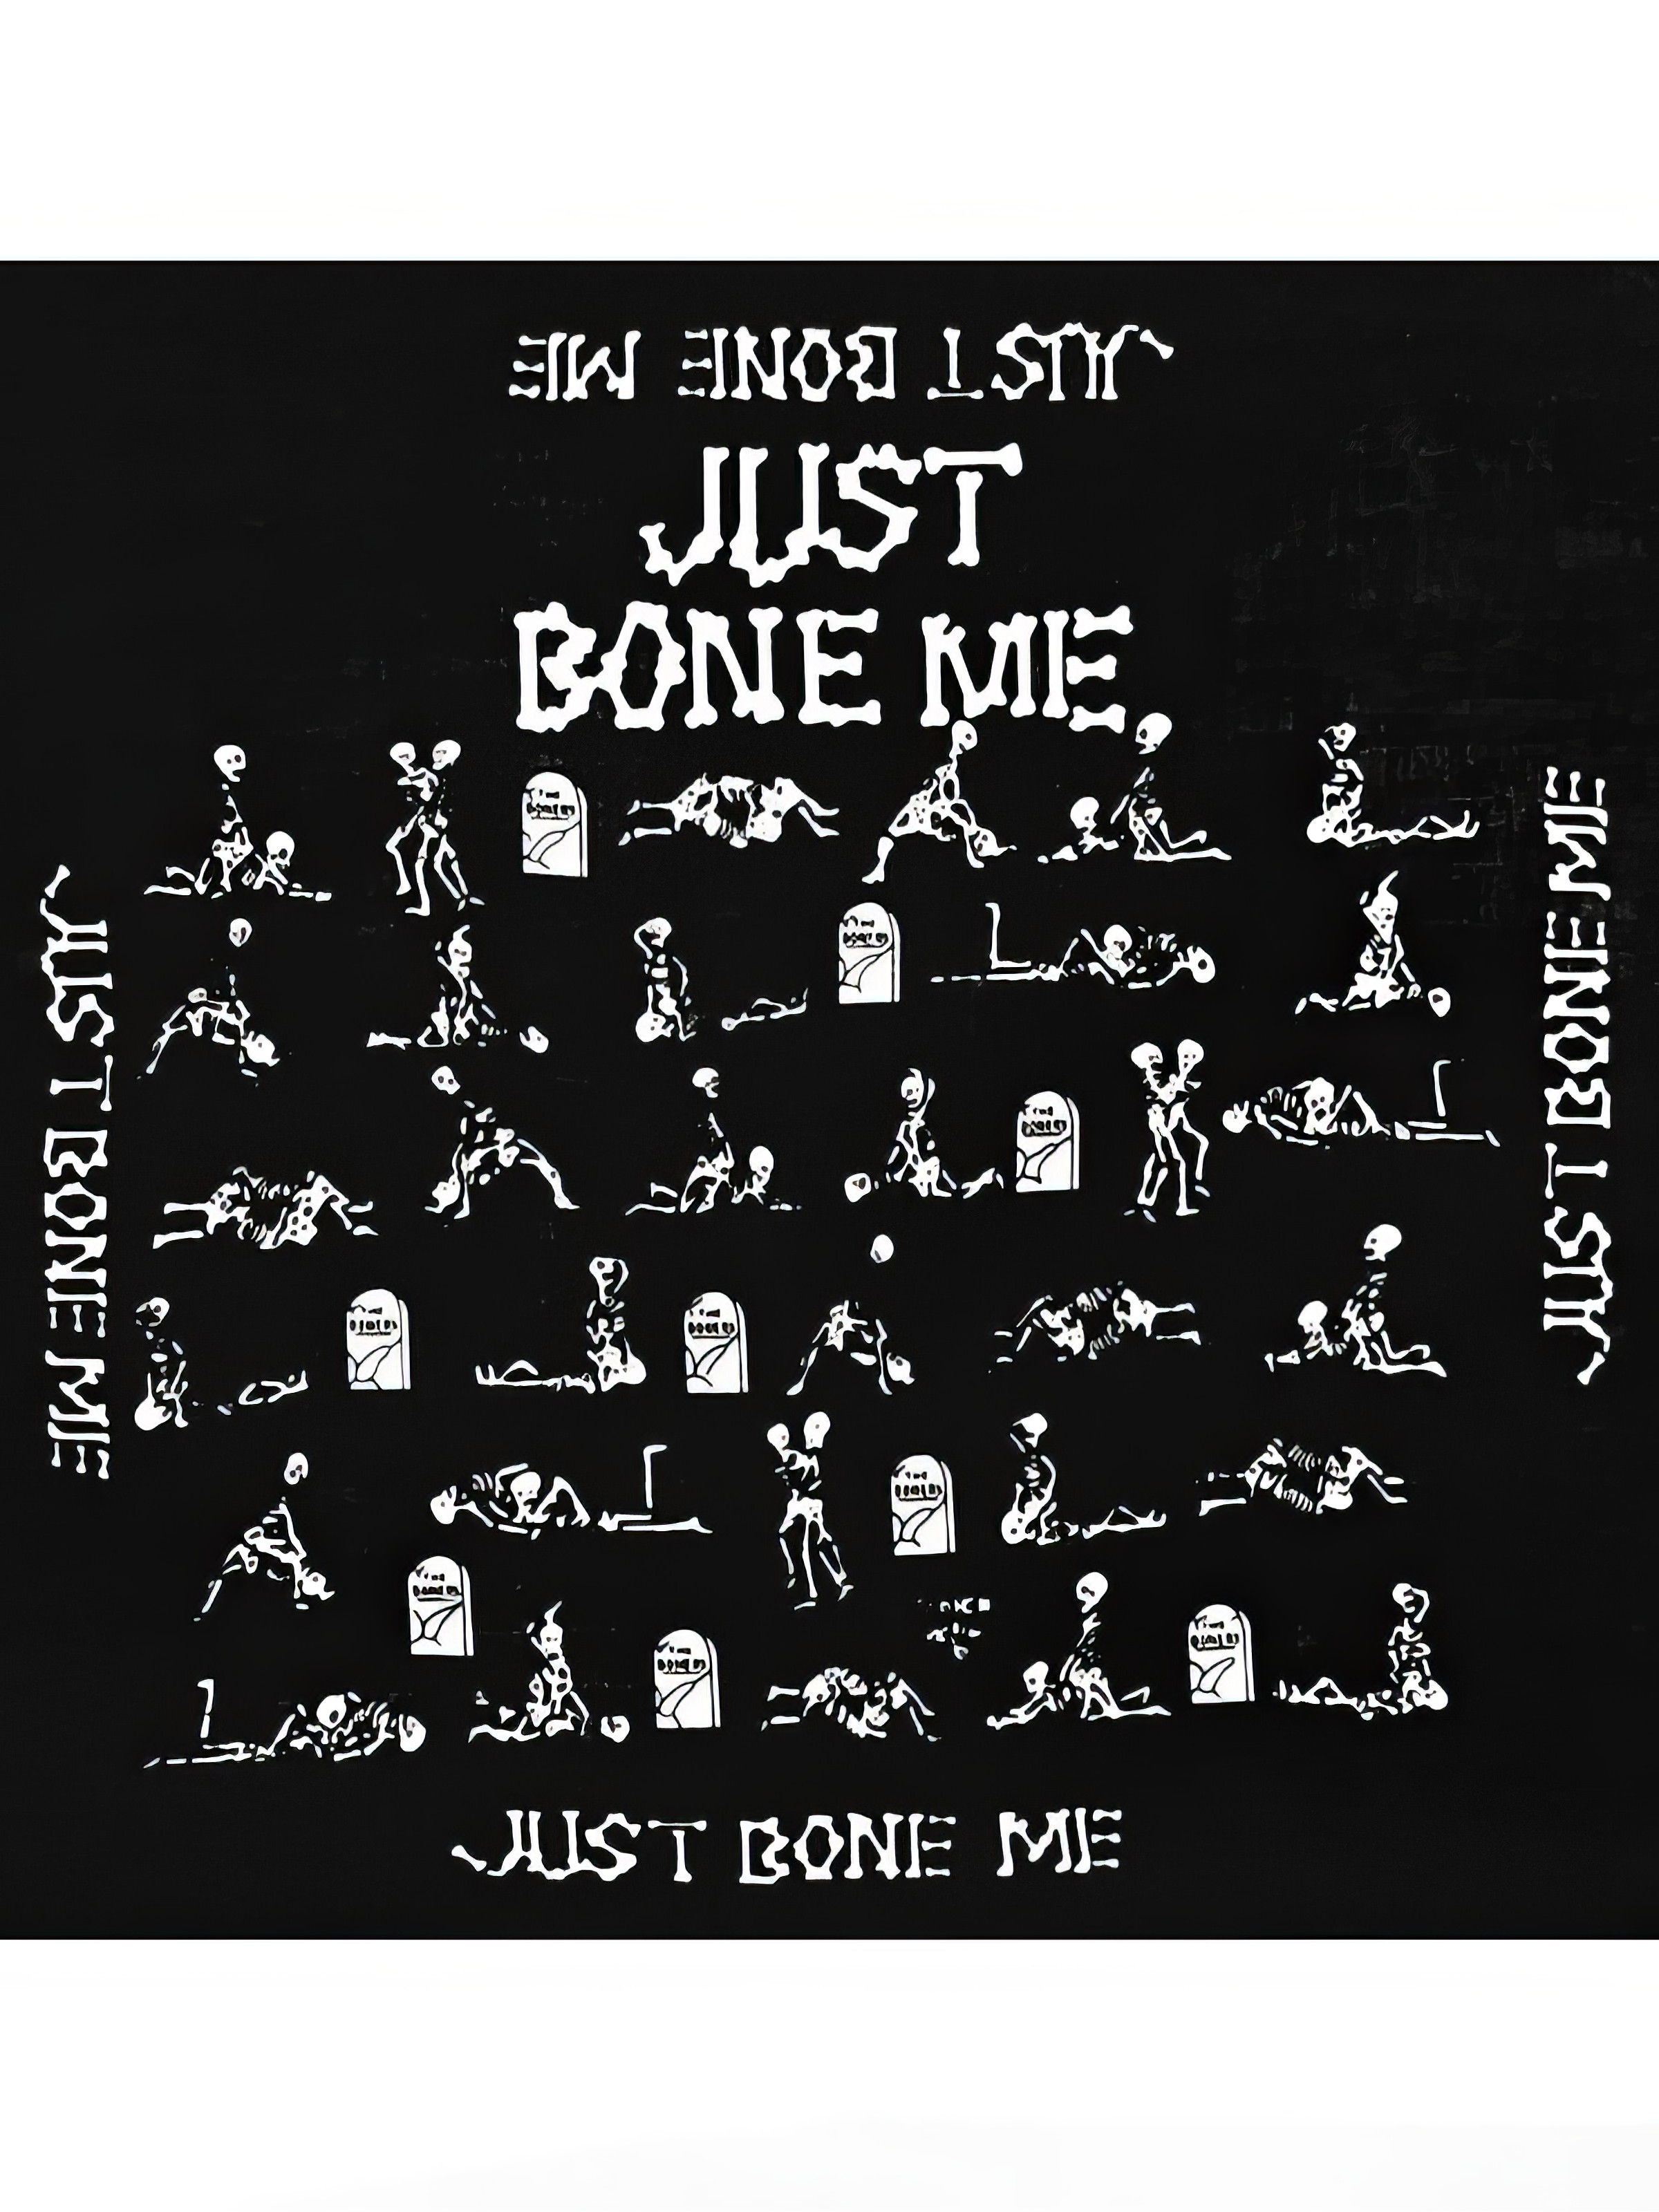 Just bones. Бандана just Bone me. Bone me. Bones year перевод.